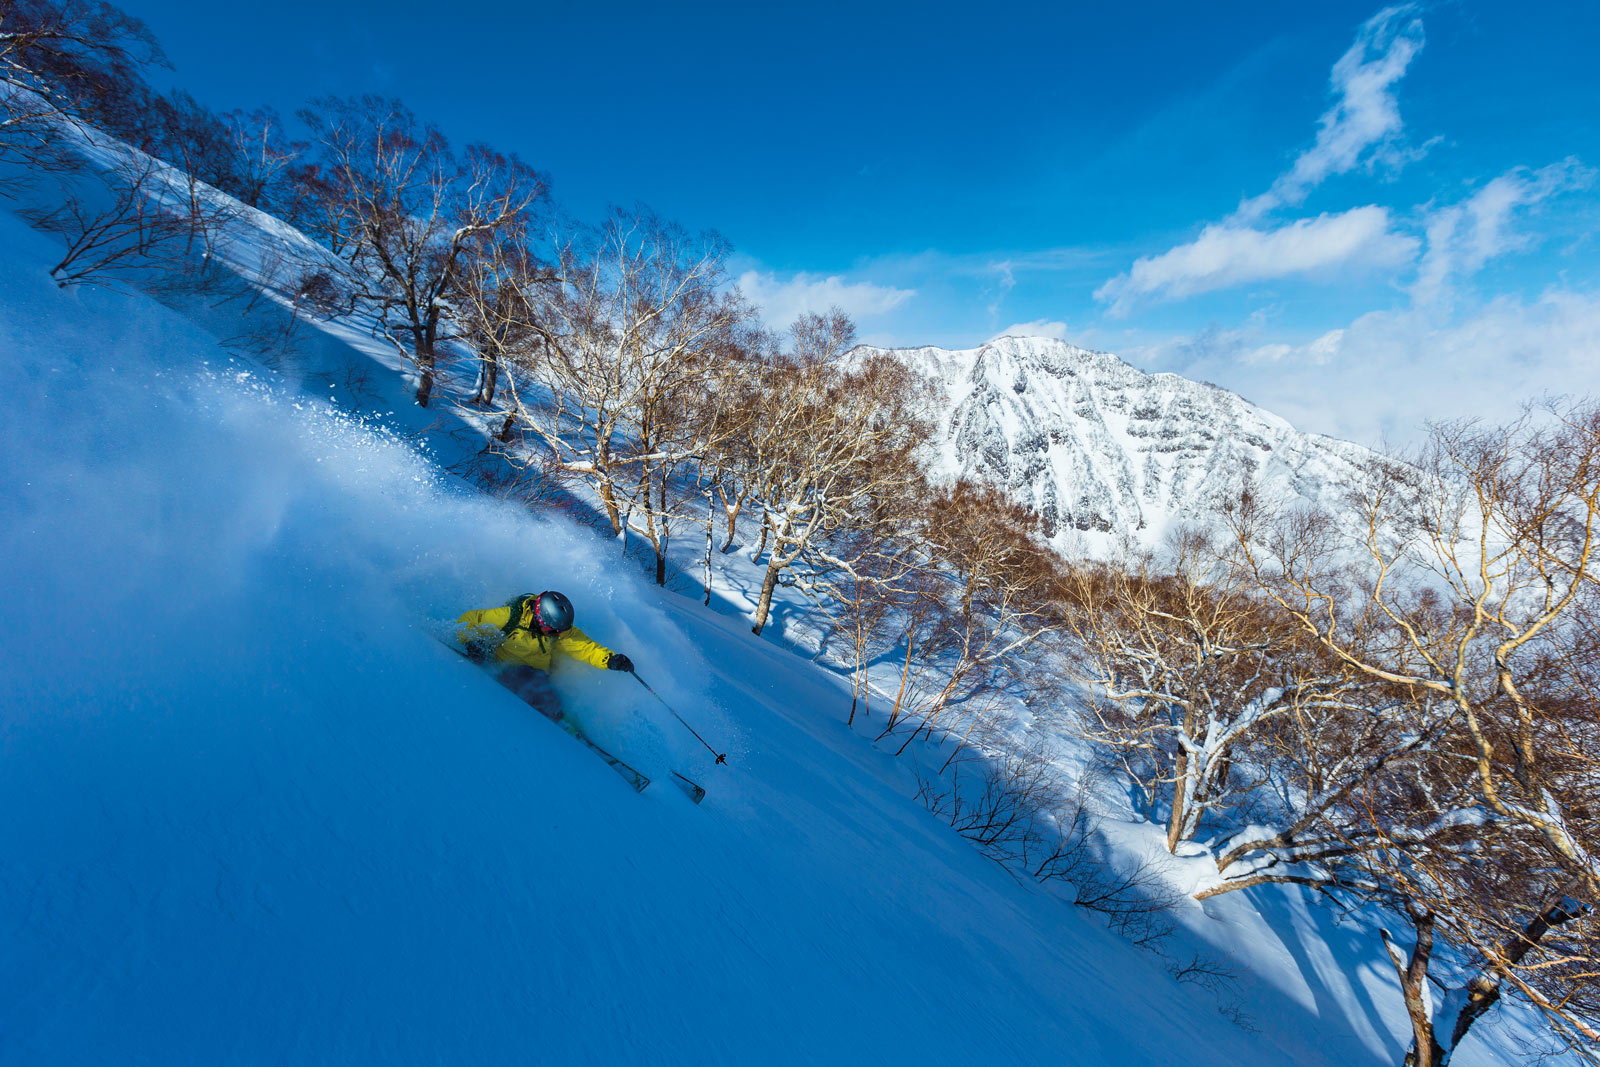 Sven Brunso skiing powder at the Akakura-Kanko ski